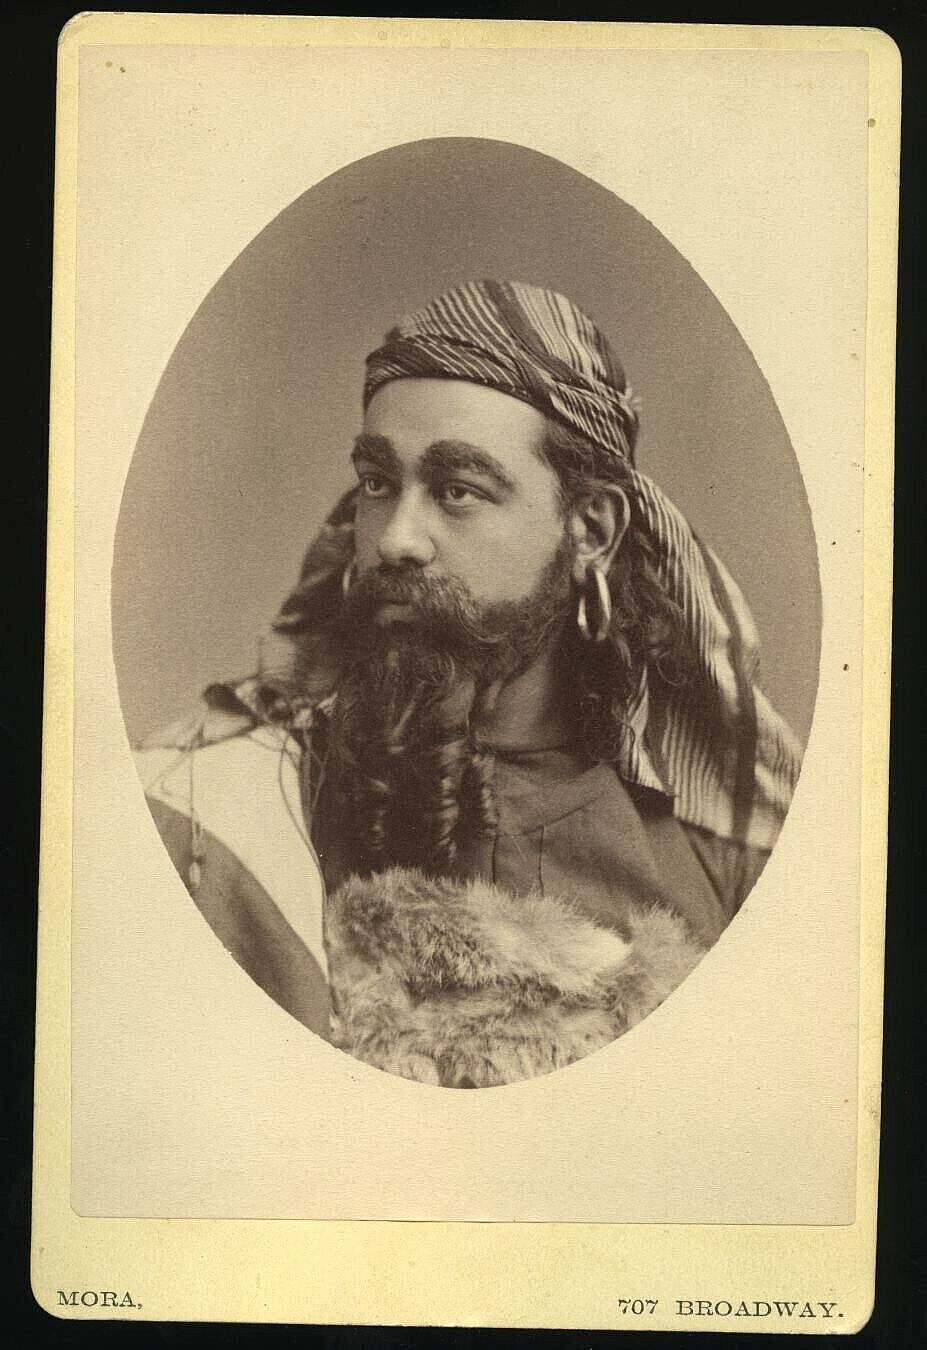 RARE 19TH CENTURY PHOTO OPERA SINGER AS KING OF EGYPT IN AIDA - MORA